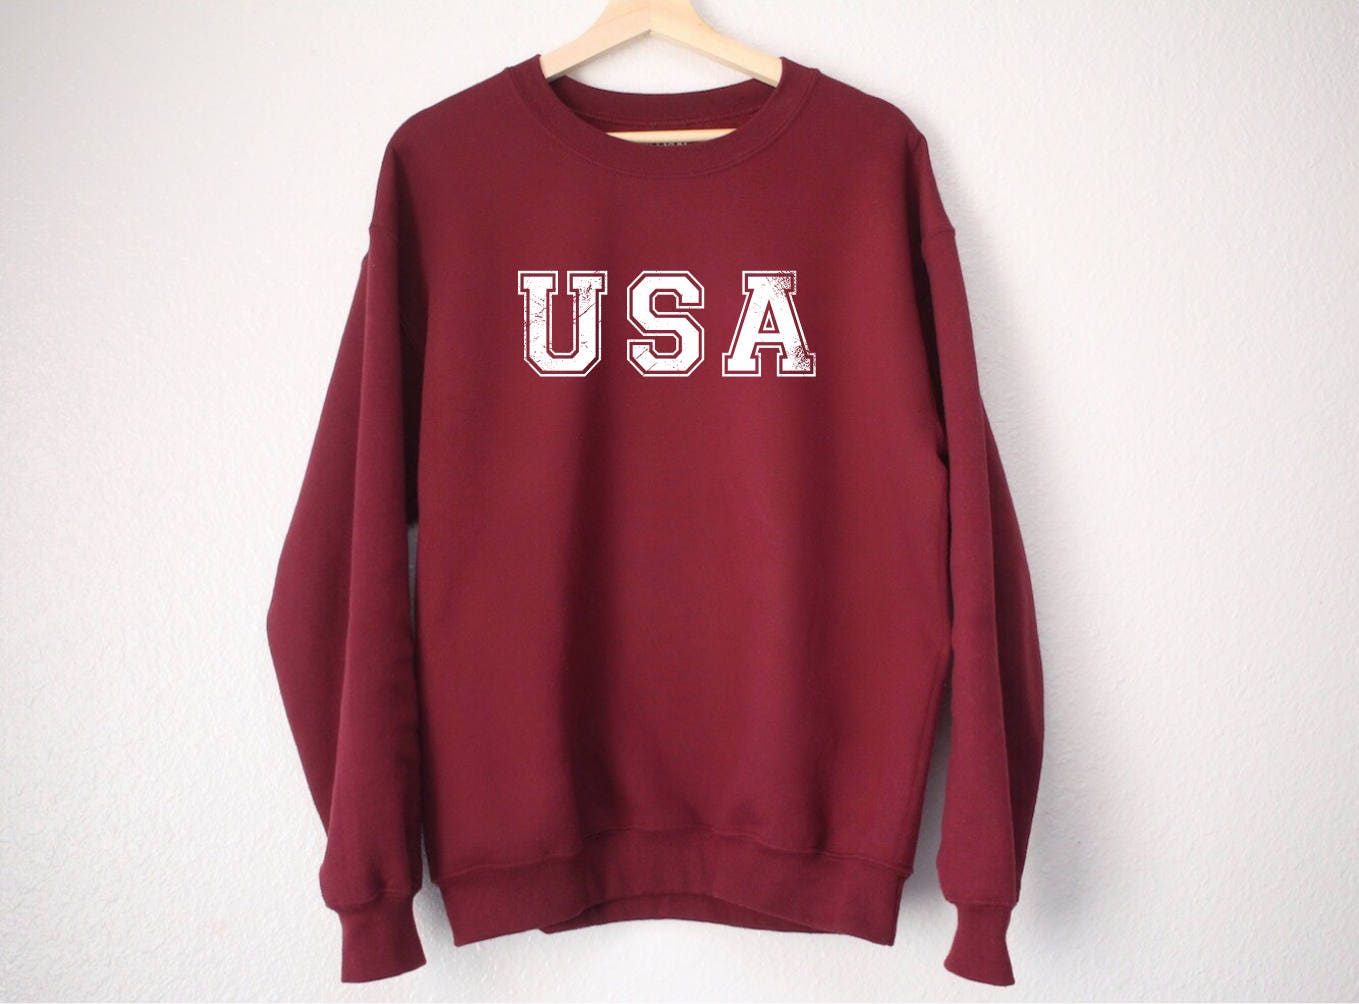 USA Sweatshirt USA Sweater America Sweatshirt Tumblr